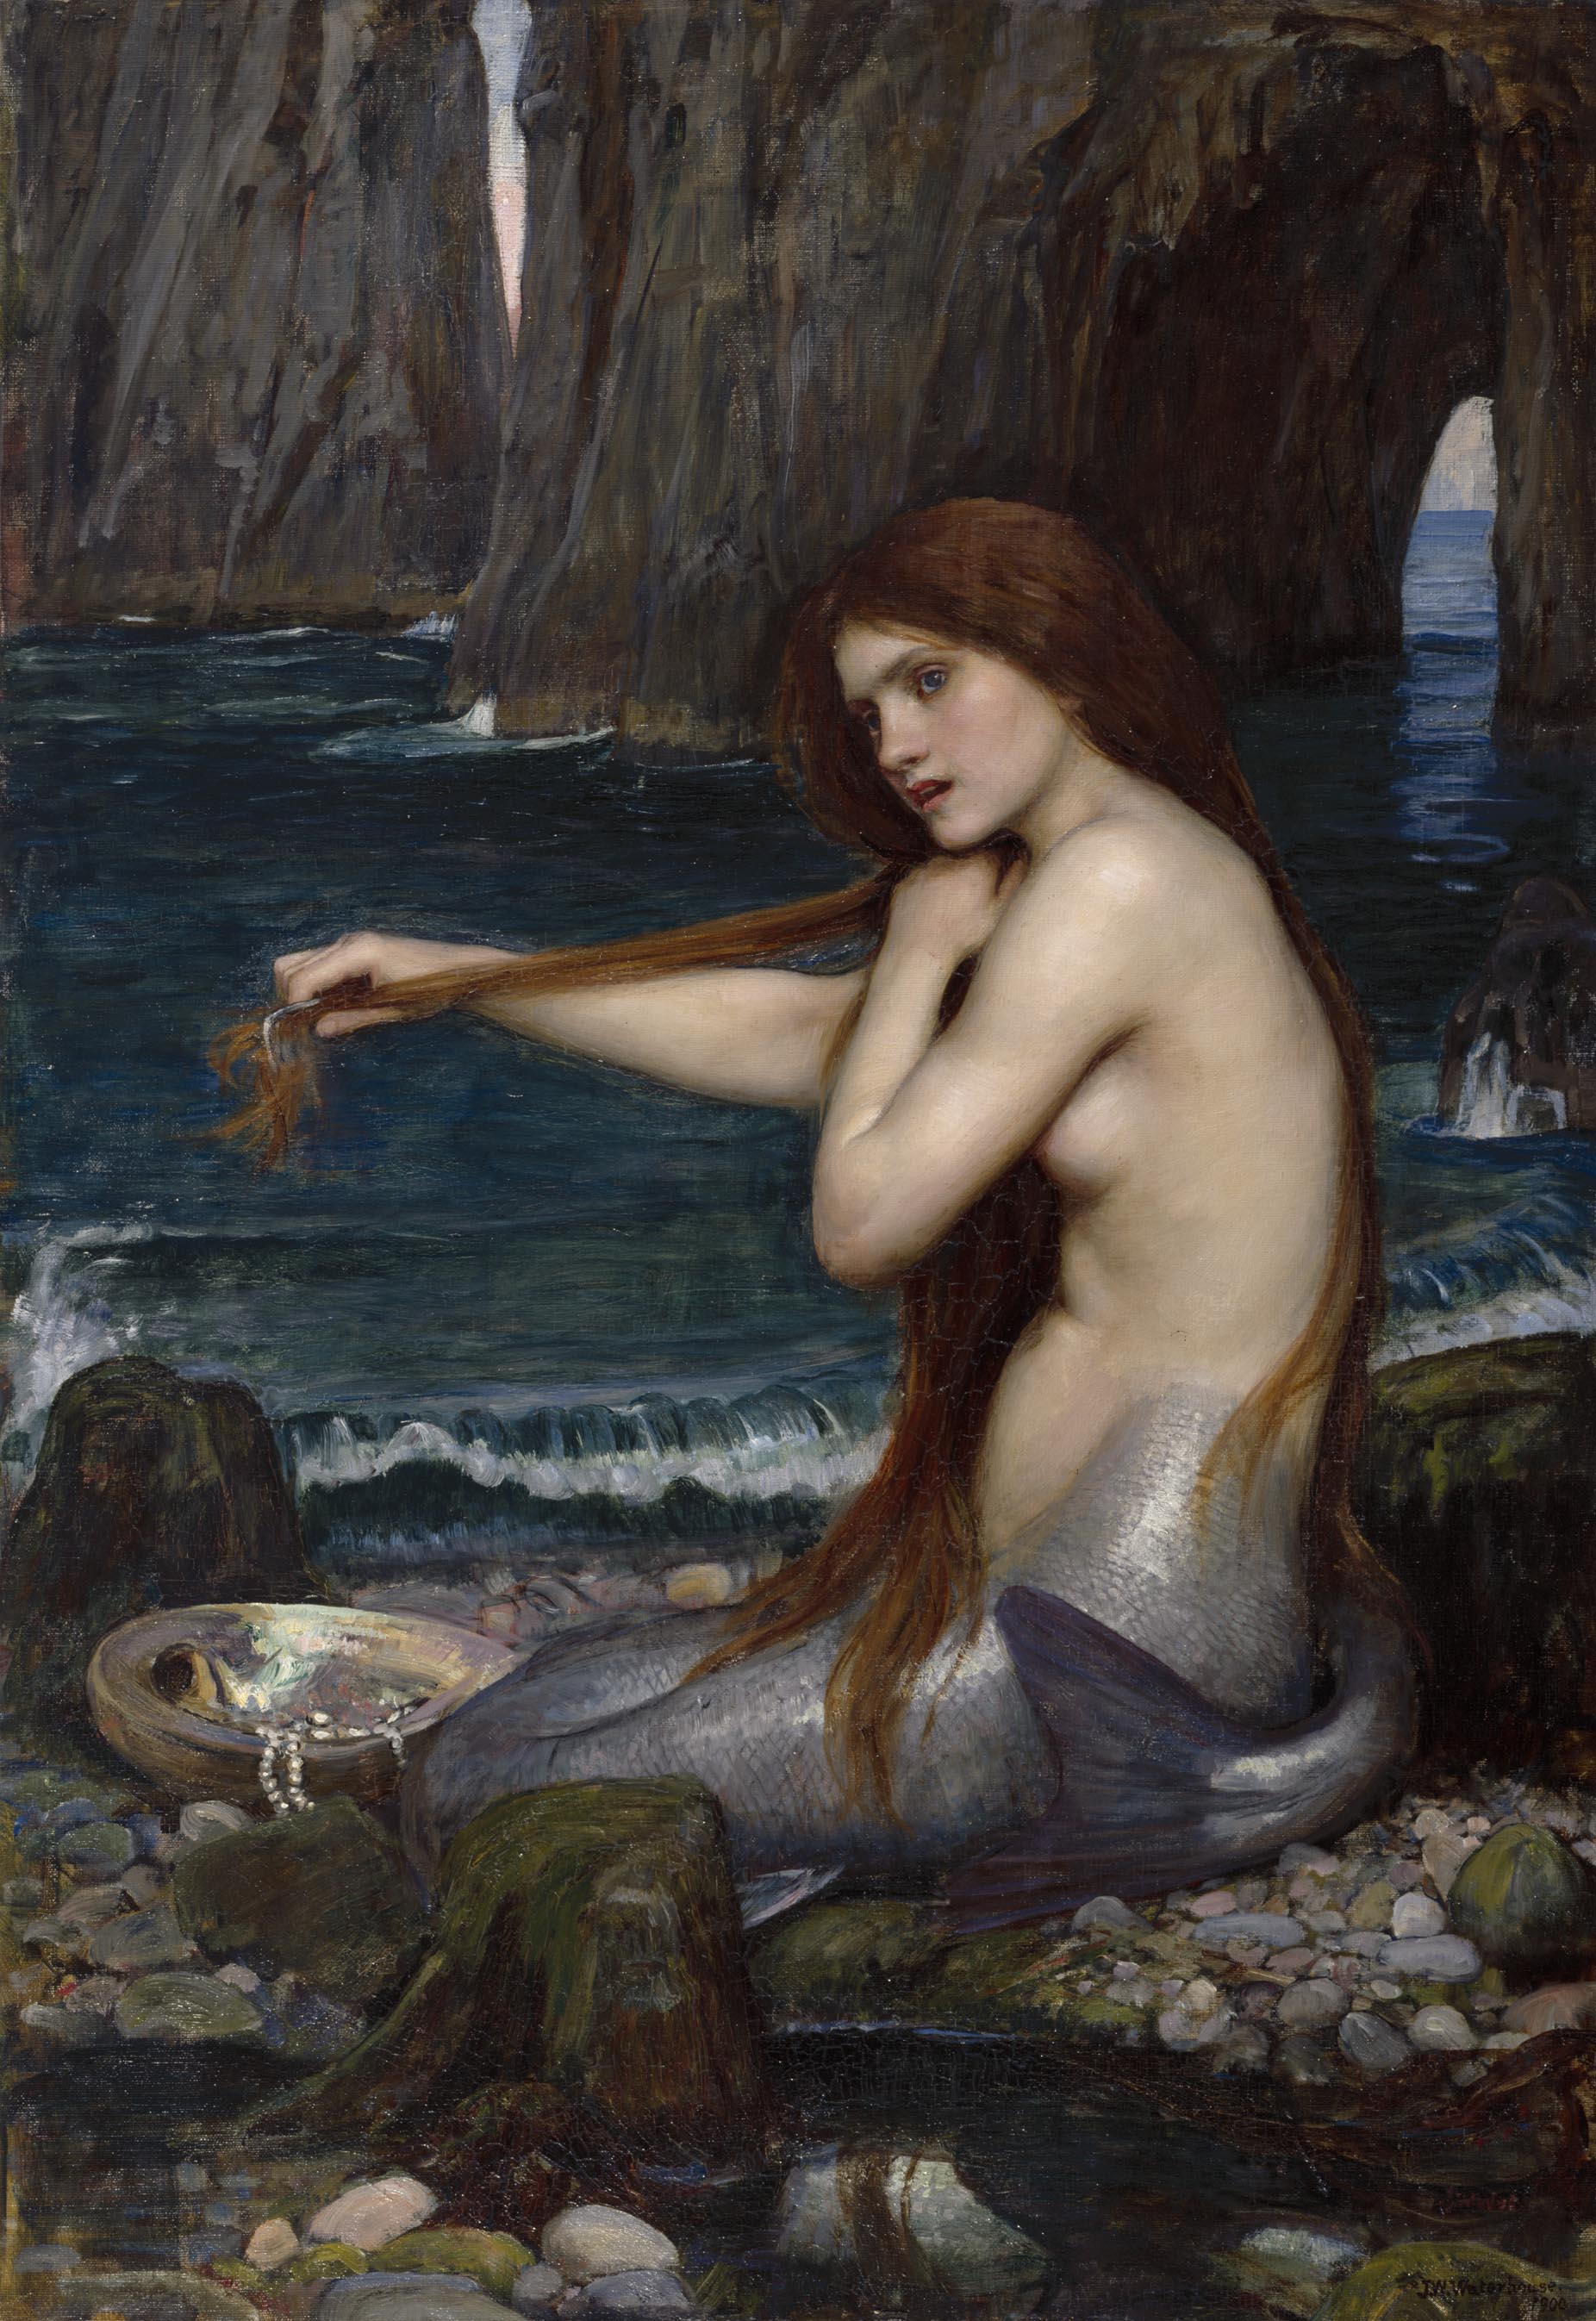 La sirena by John William Waterhouse - 1900 - 96,5 x 66,6 cm 